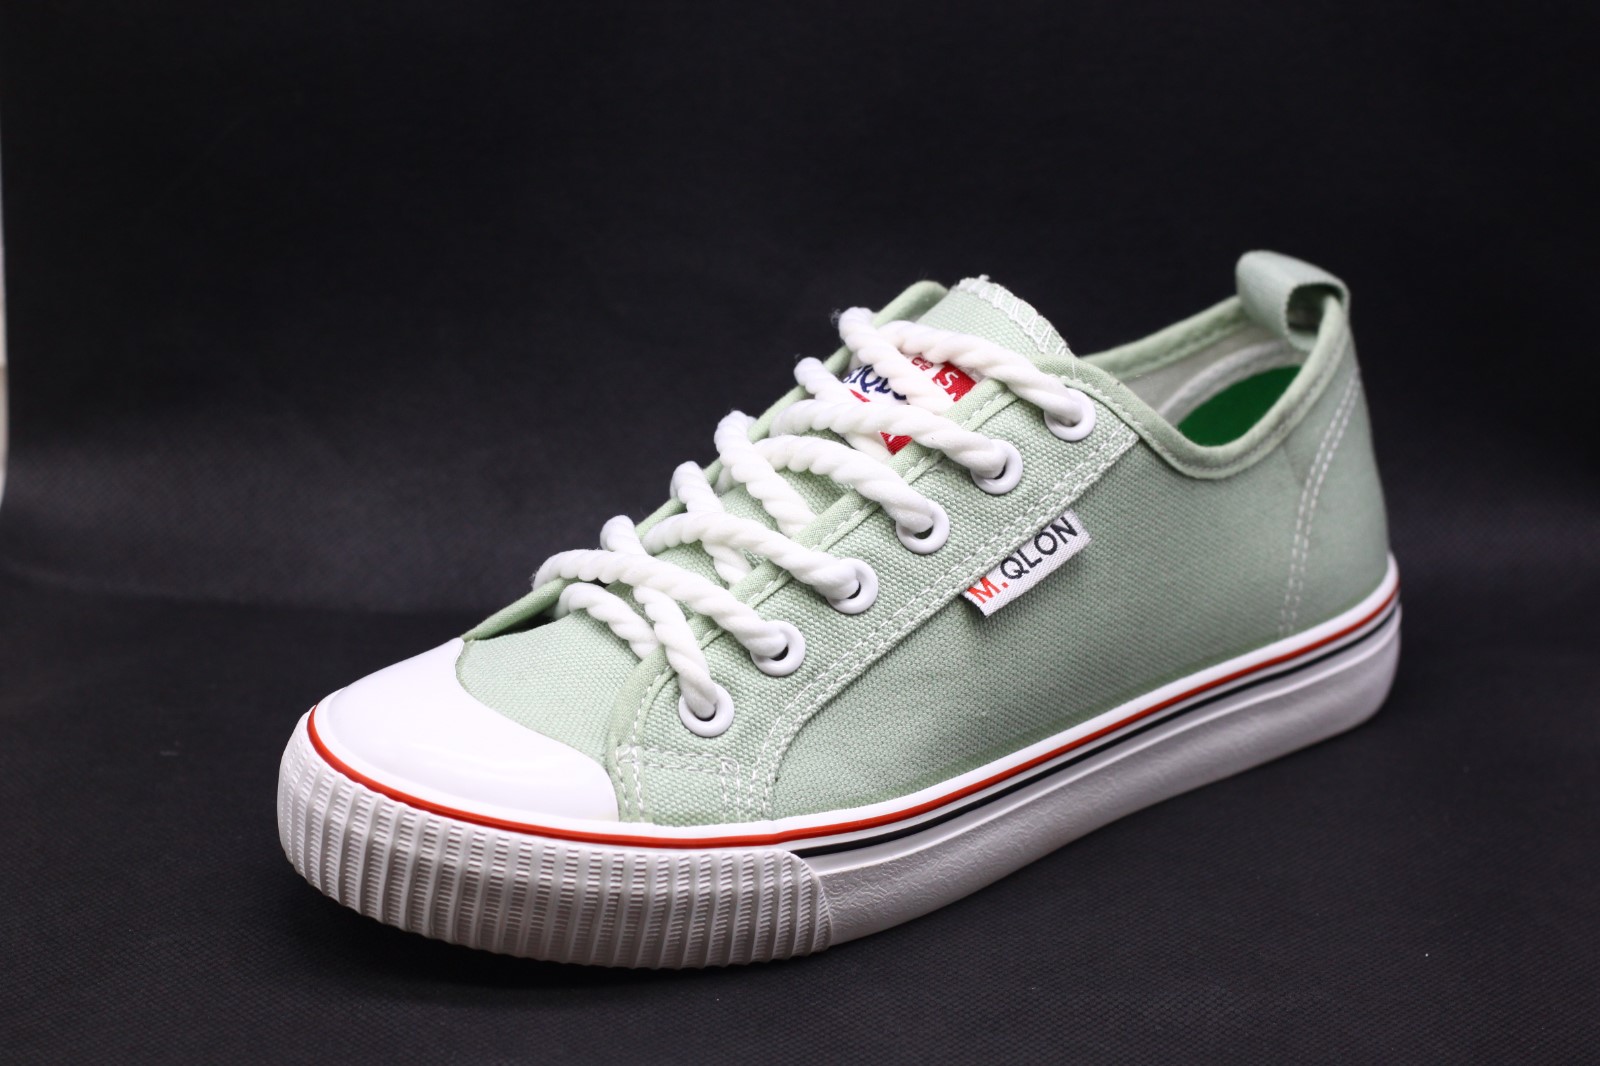 light green colour shoes